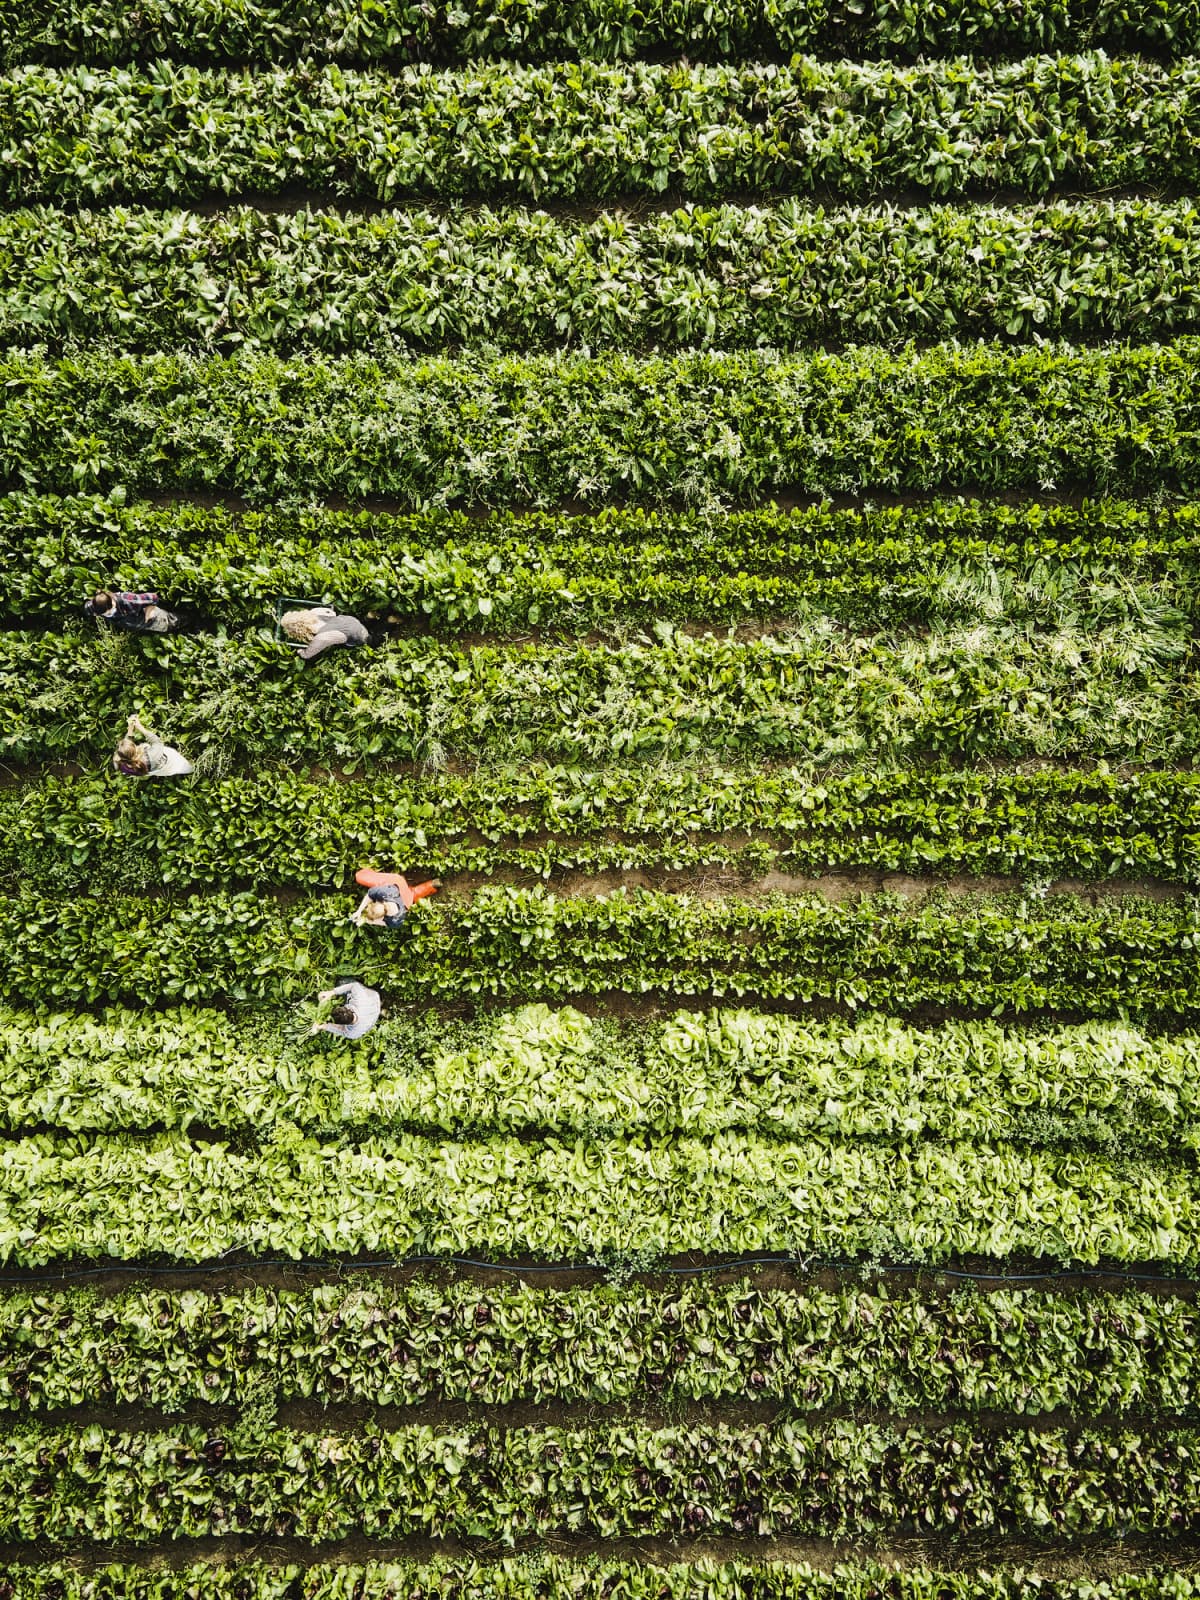 Aerial shot of farmers harvesting kale